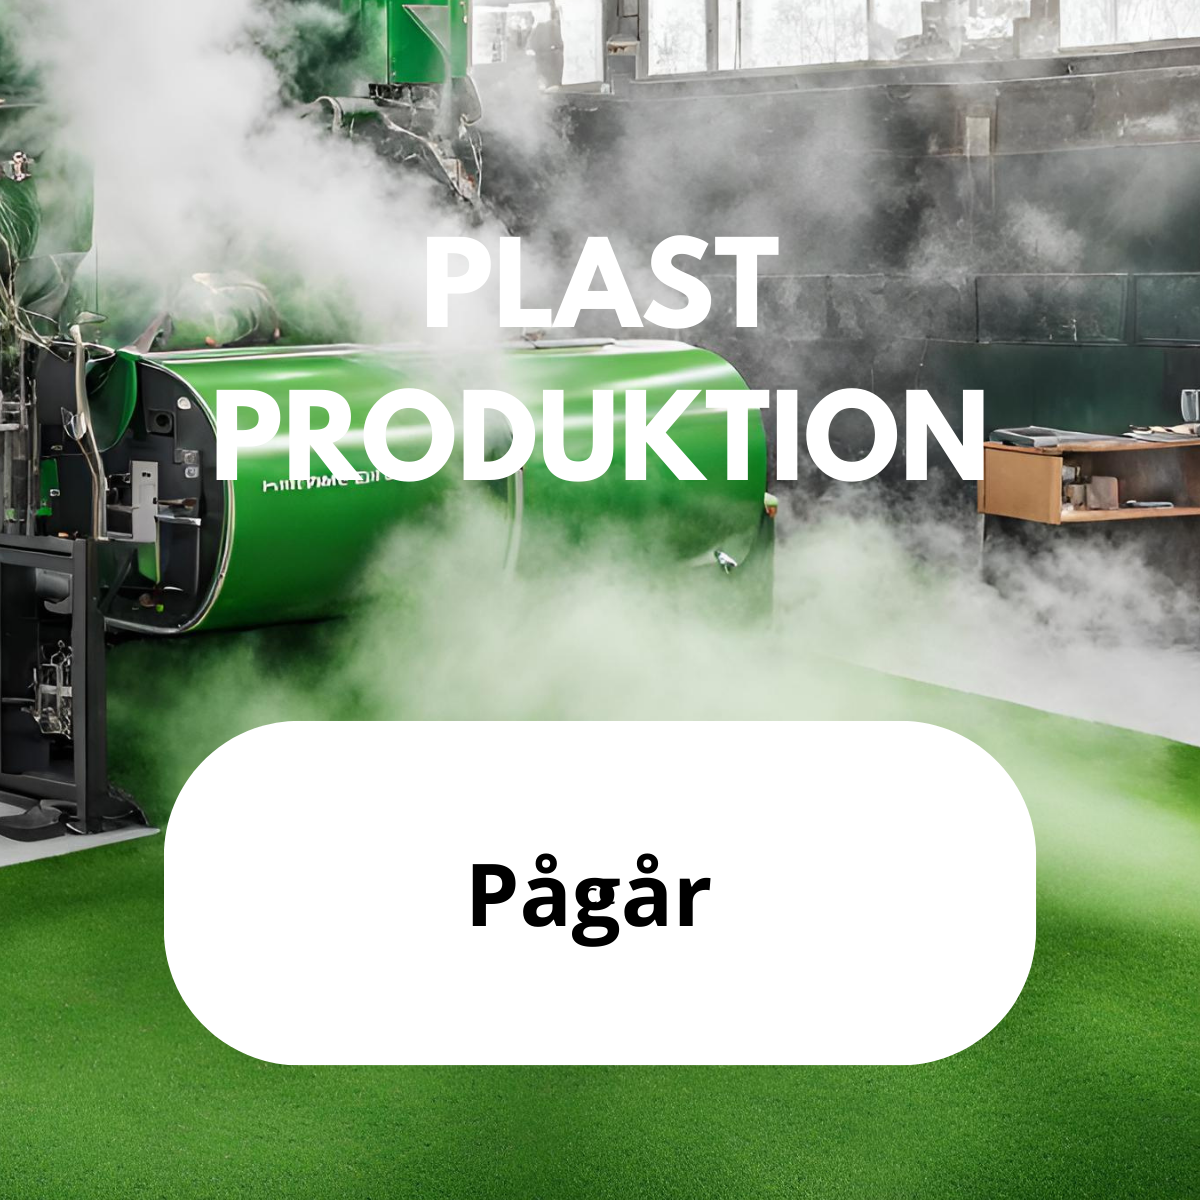 Plast produktion